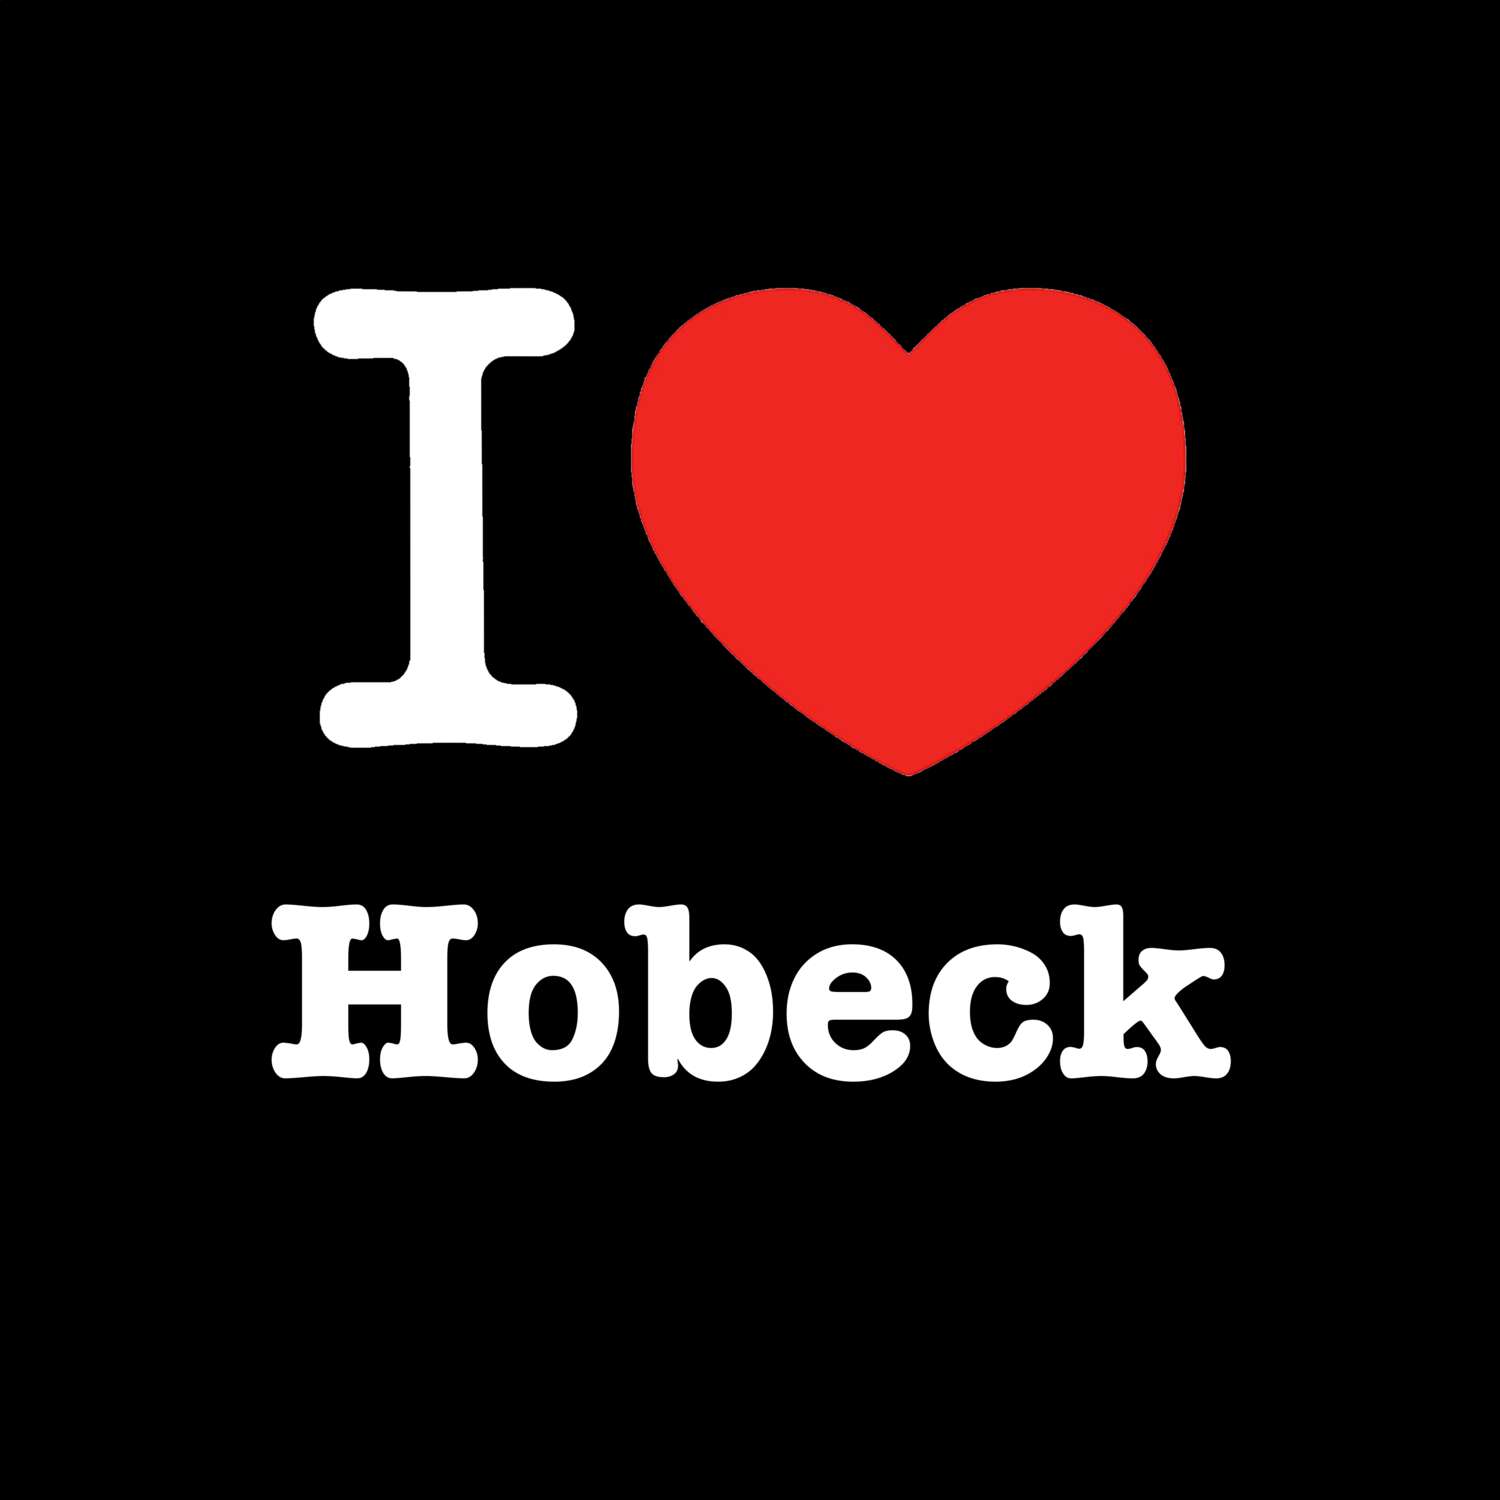 Hobeck T-Shirt »I love«